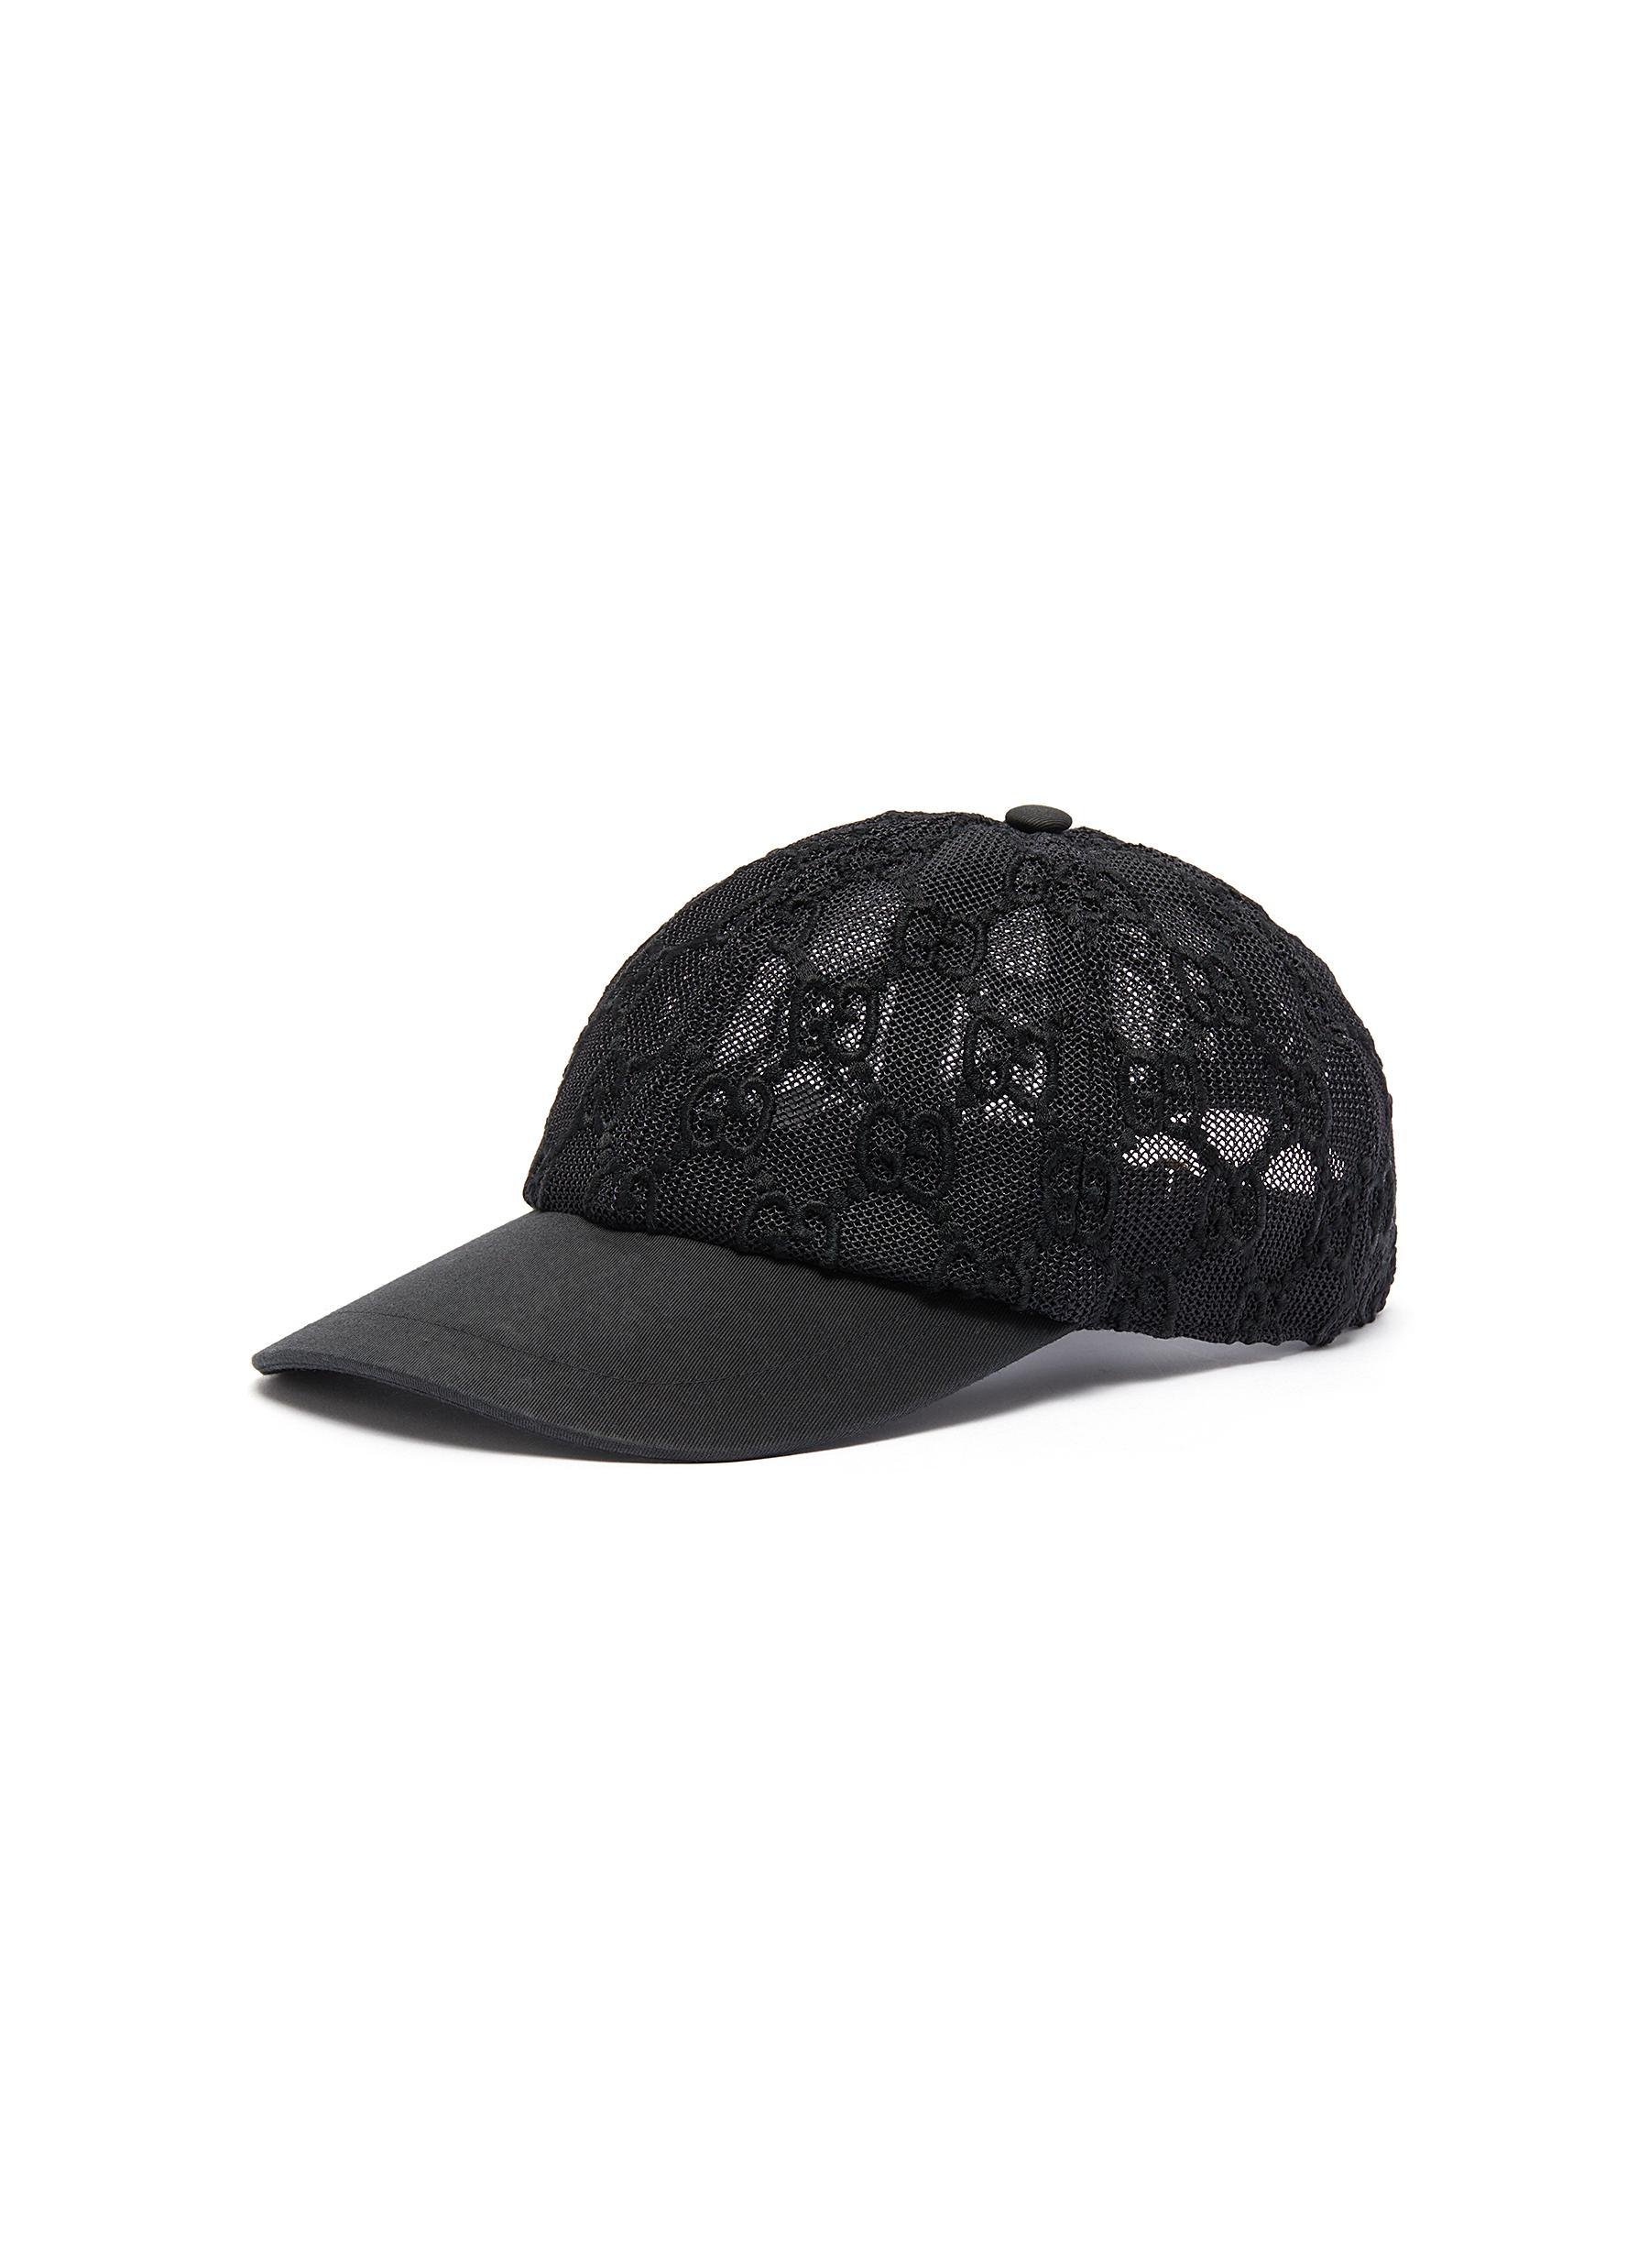 Gucci Black Original Diamante Web Pattern Baseball Cap, drycleaned. Size S  - Harrington & Co.